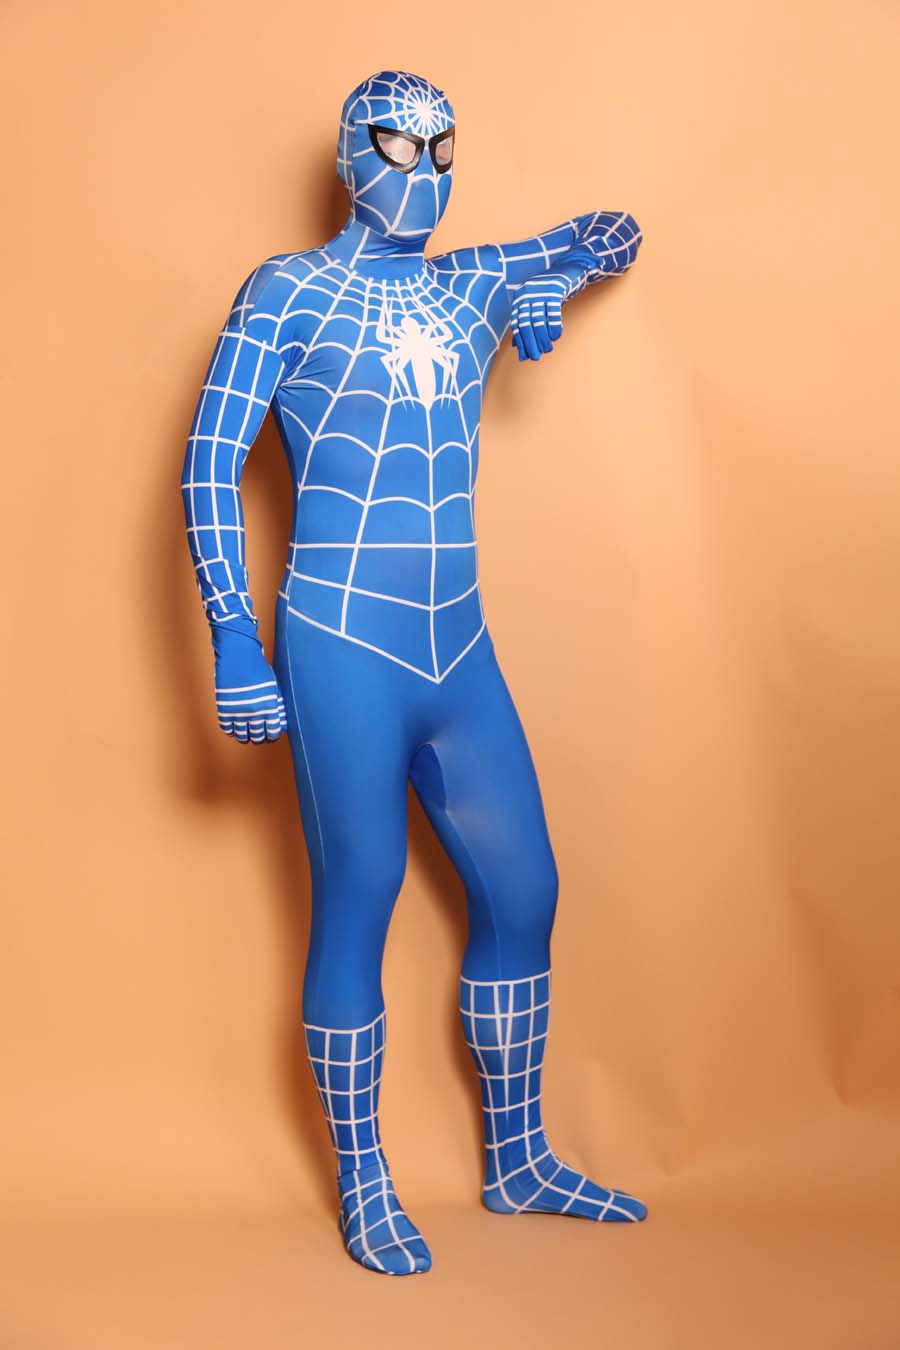 New Printing Blue Spiderman Cosplay Costume